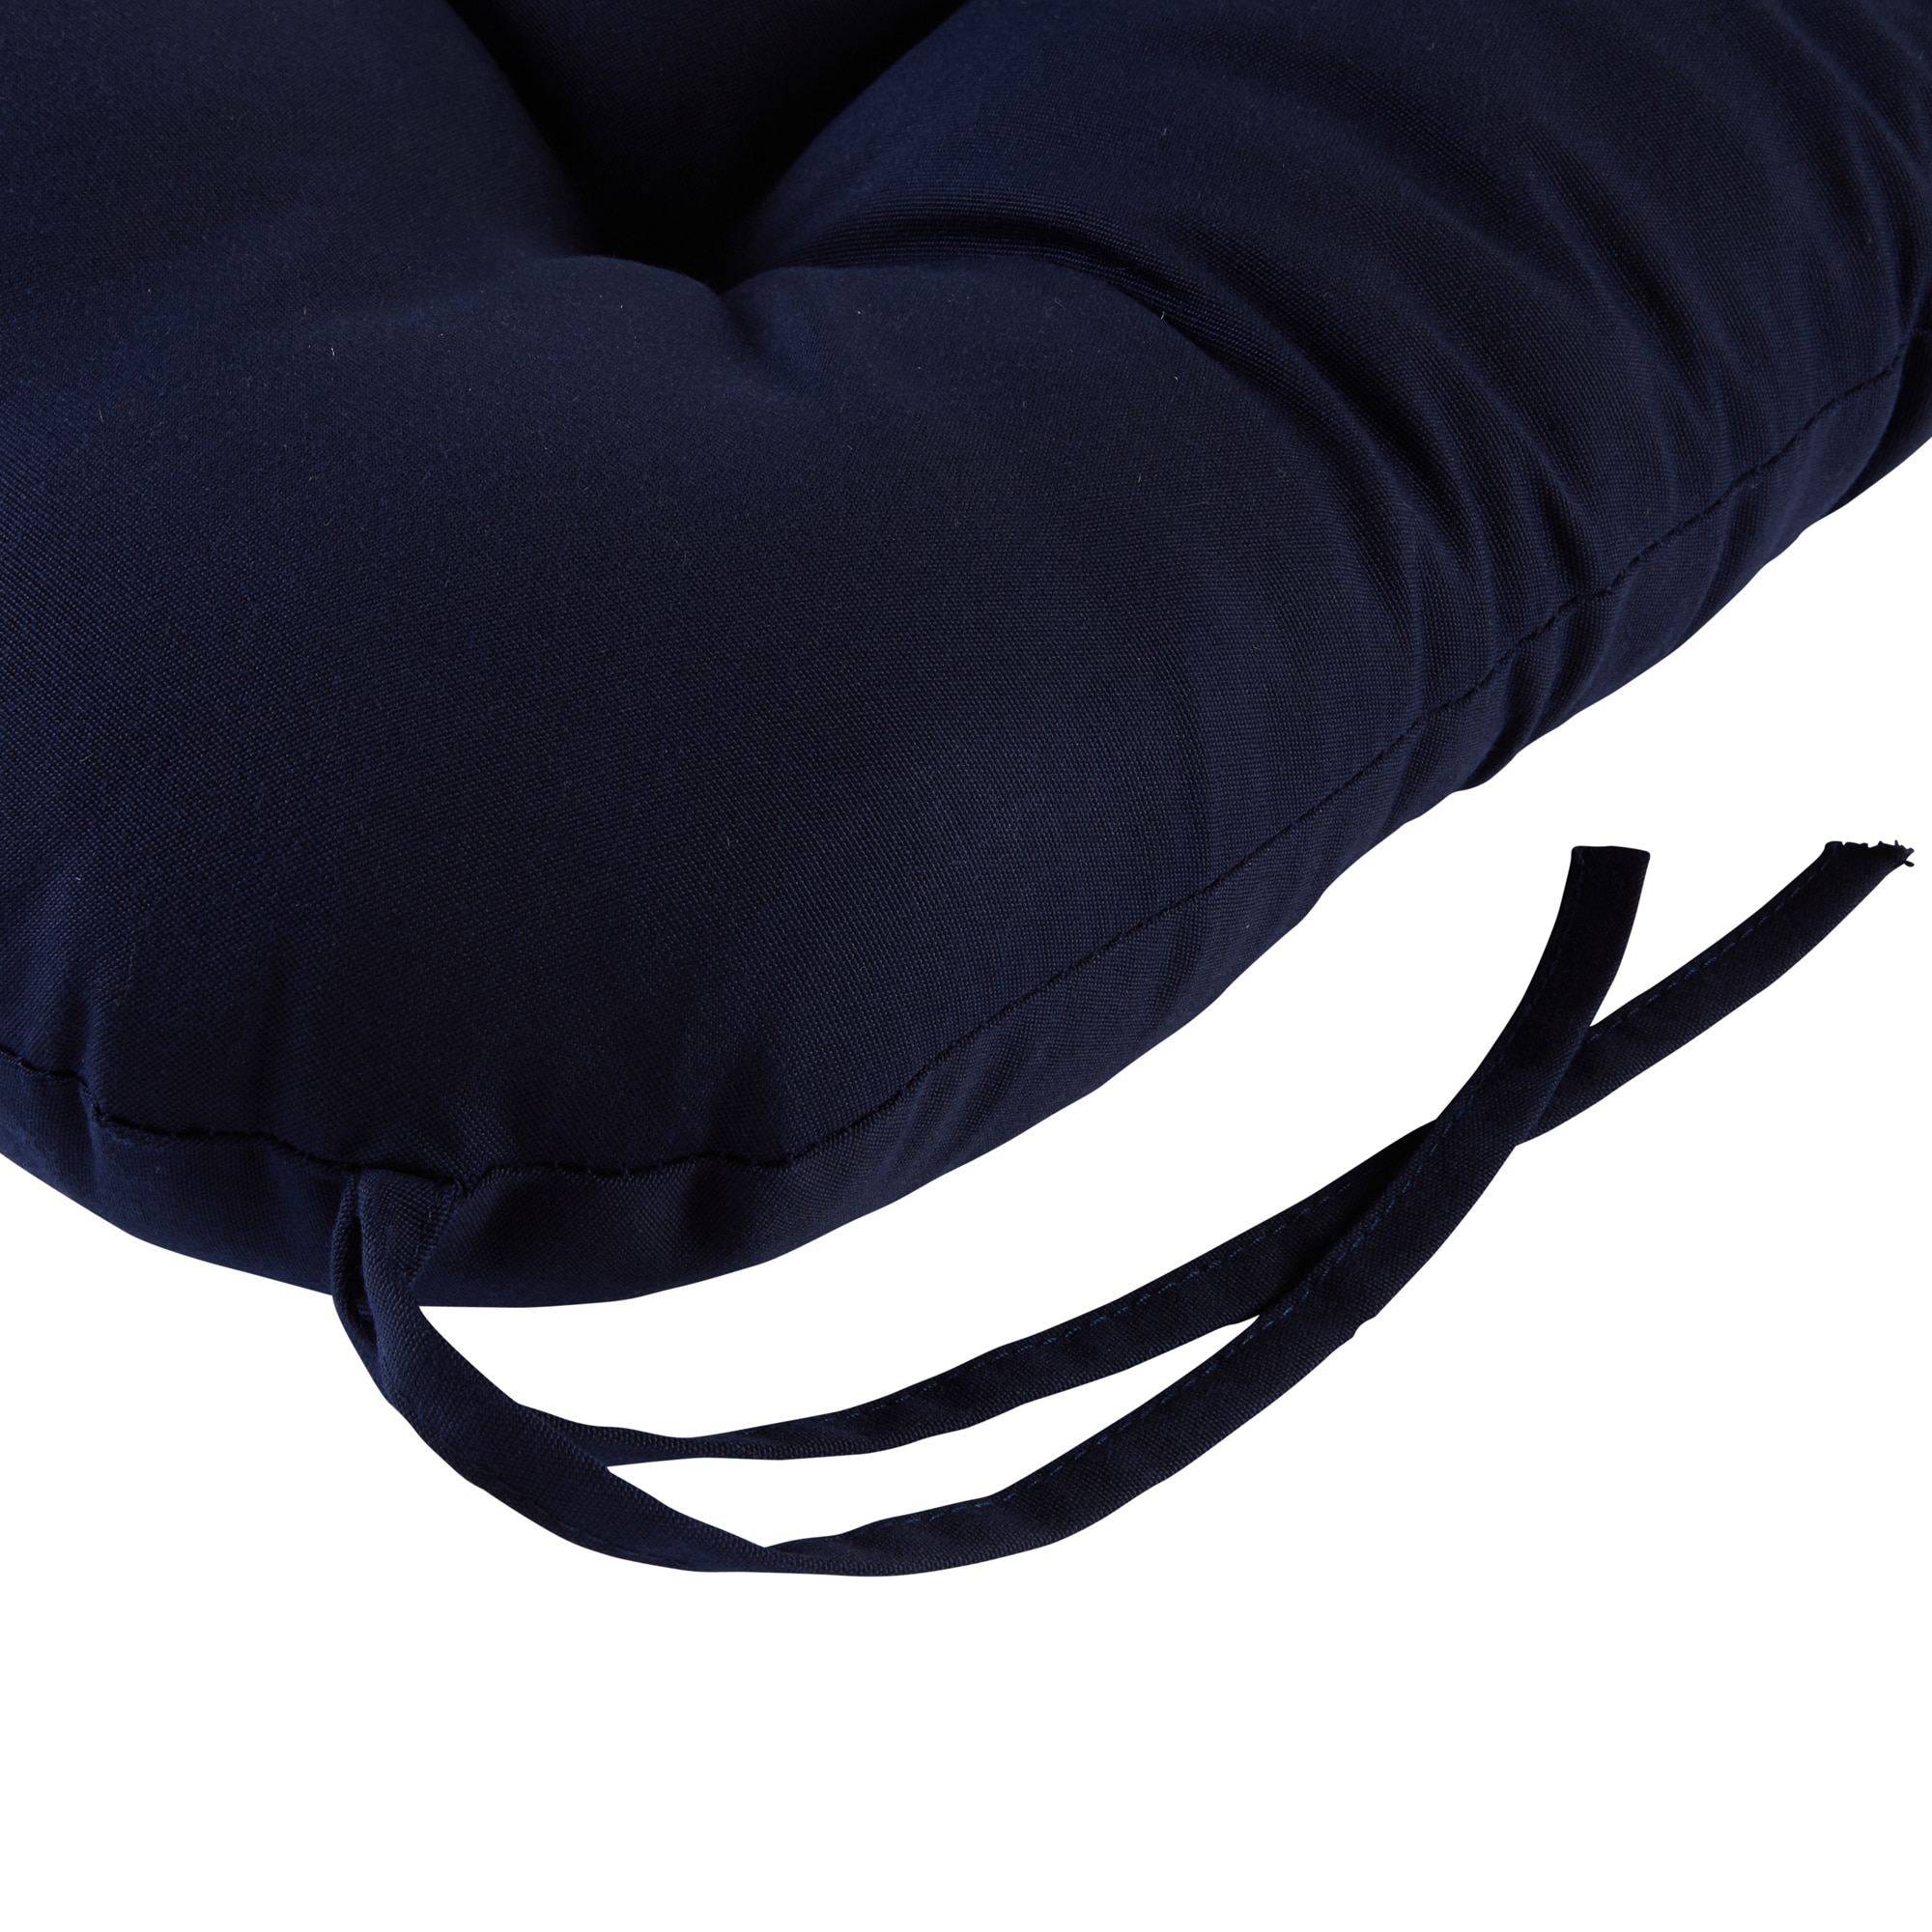 Sunbrella Classic Swing/Bench Cushion, 59 x 16½ x 3 - Aqua